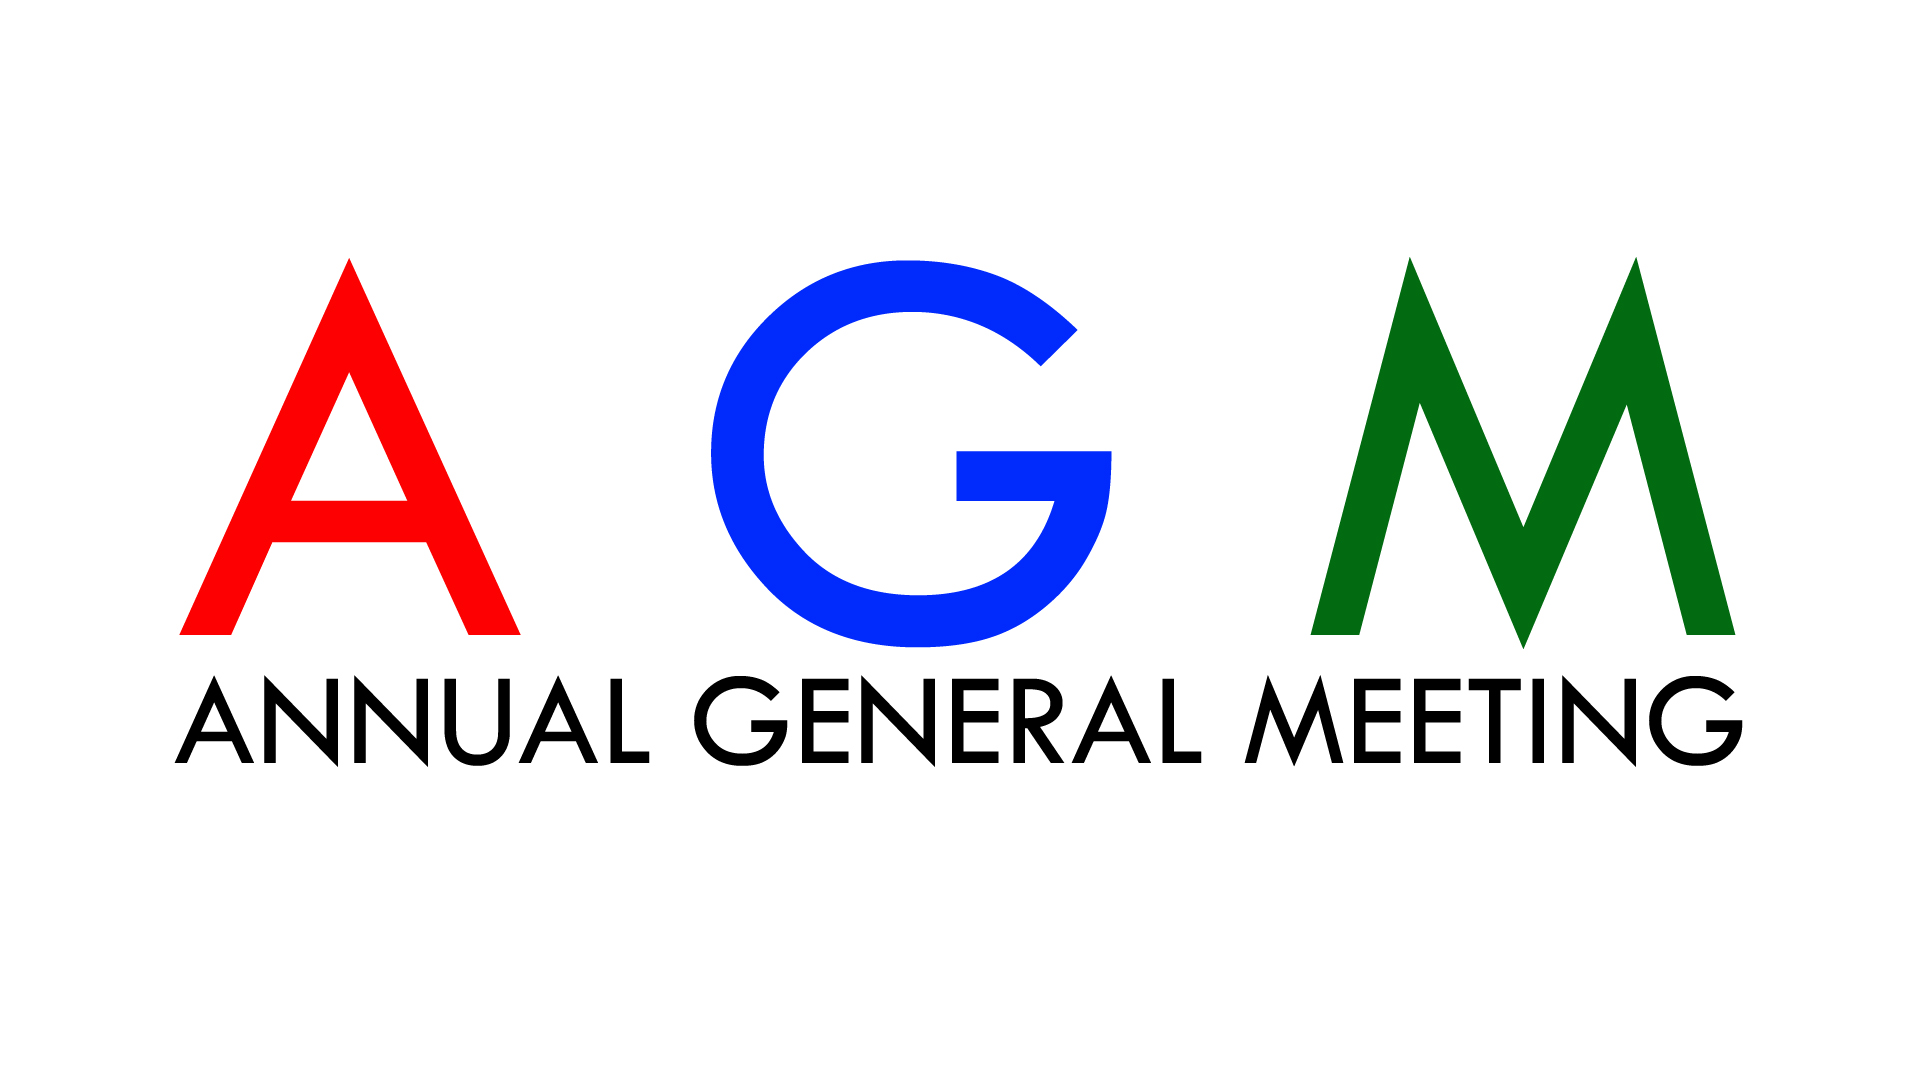 Annual General Meeting Logo